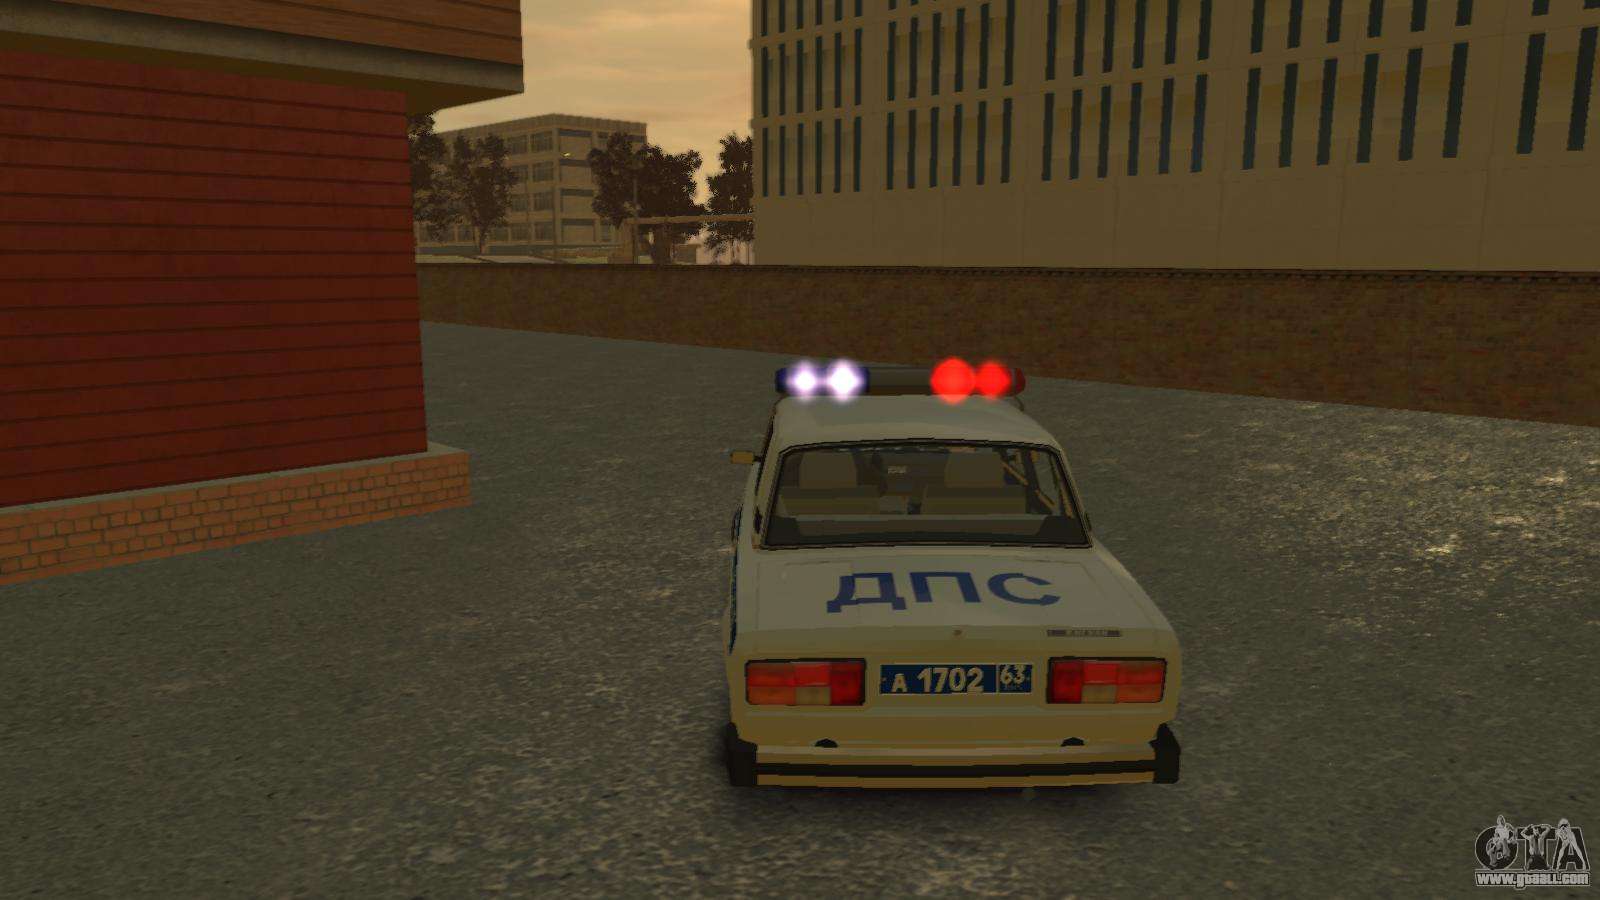 GTA Vice City/San Andreas Police Sirens Sound Mod - GTA5-Mods.com